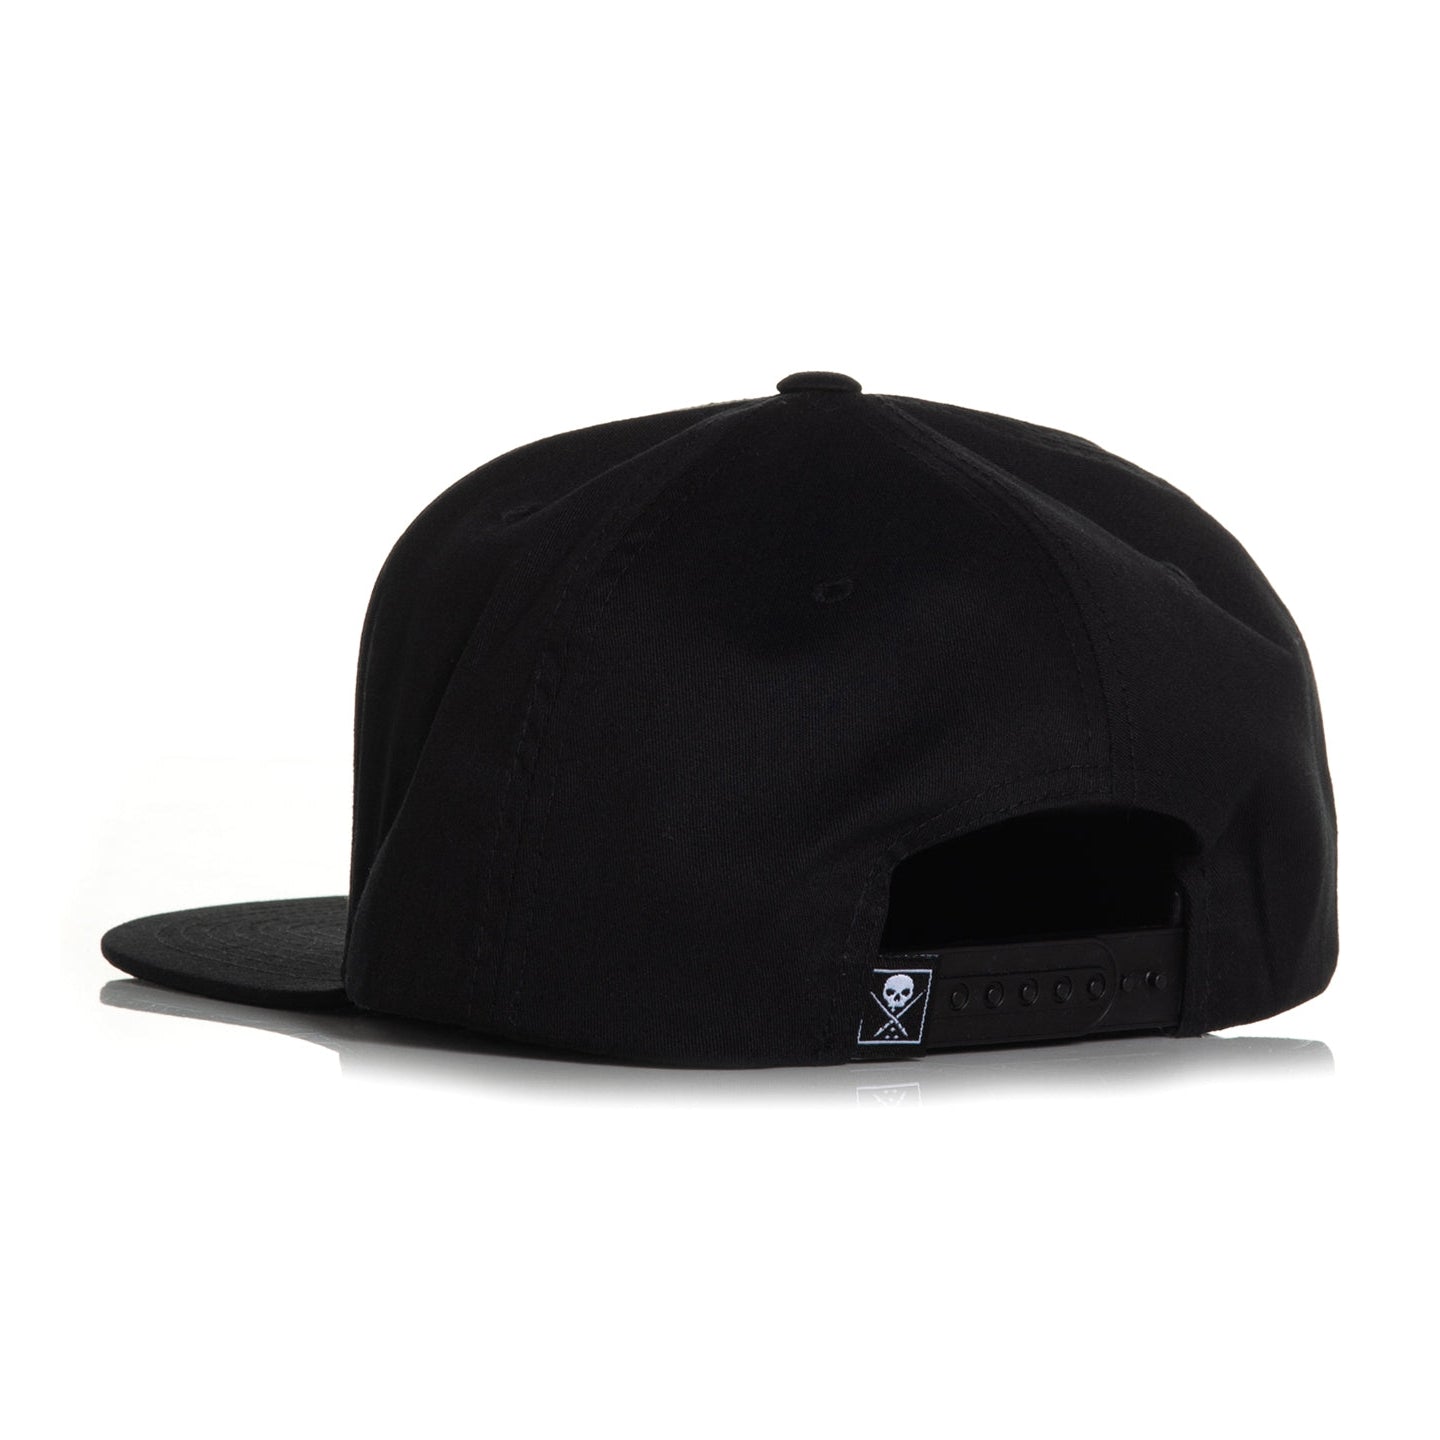 SULLEN CLOTHING PALLADIUM BLACK SNAPBACK CAP HAT